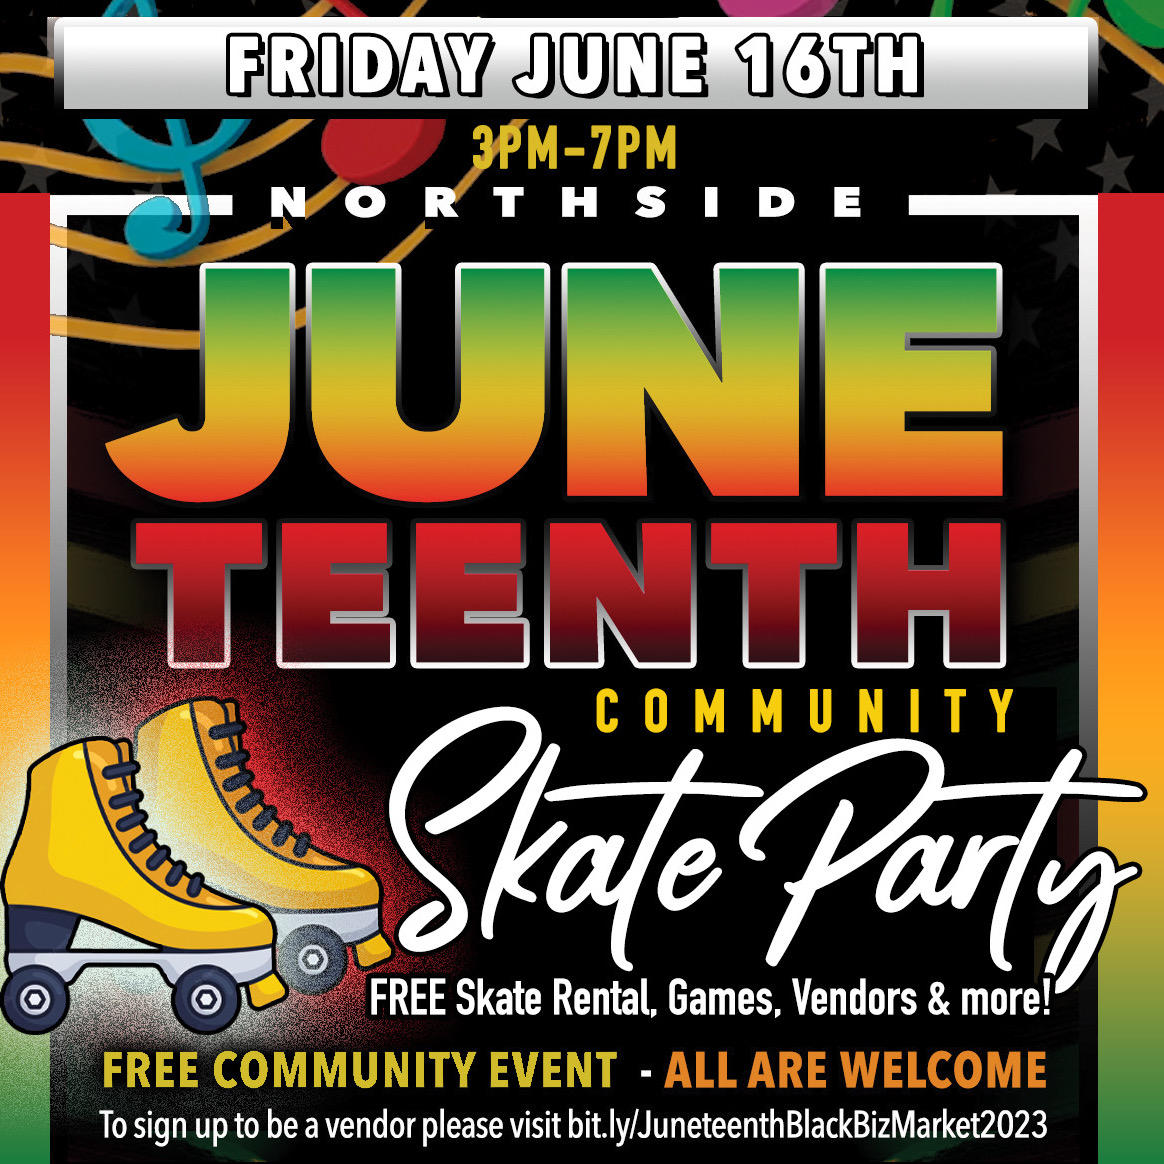 Northside Juneteenth Skate Party